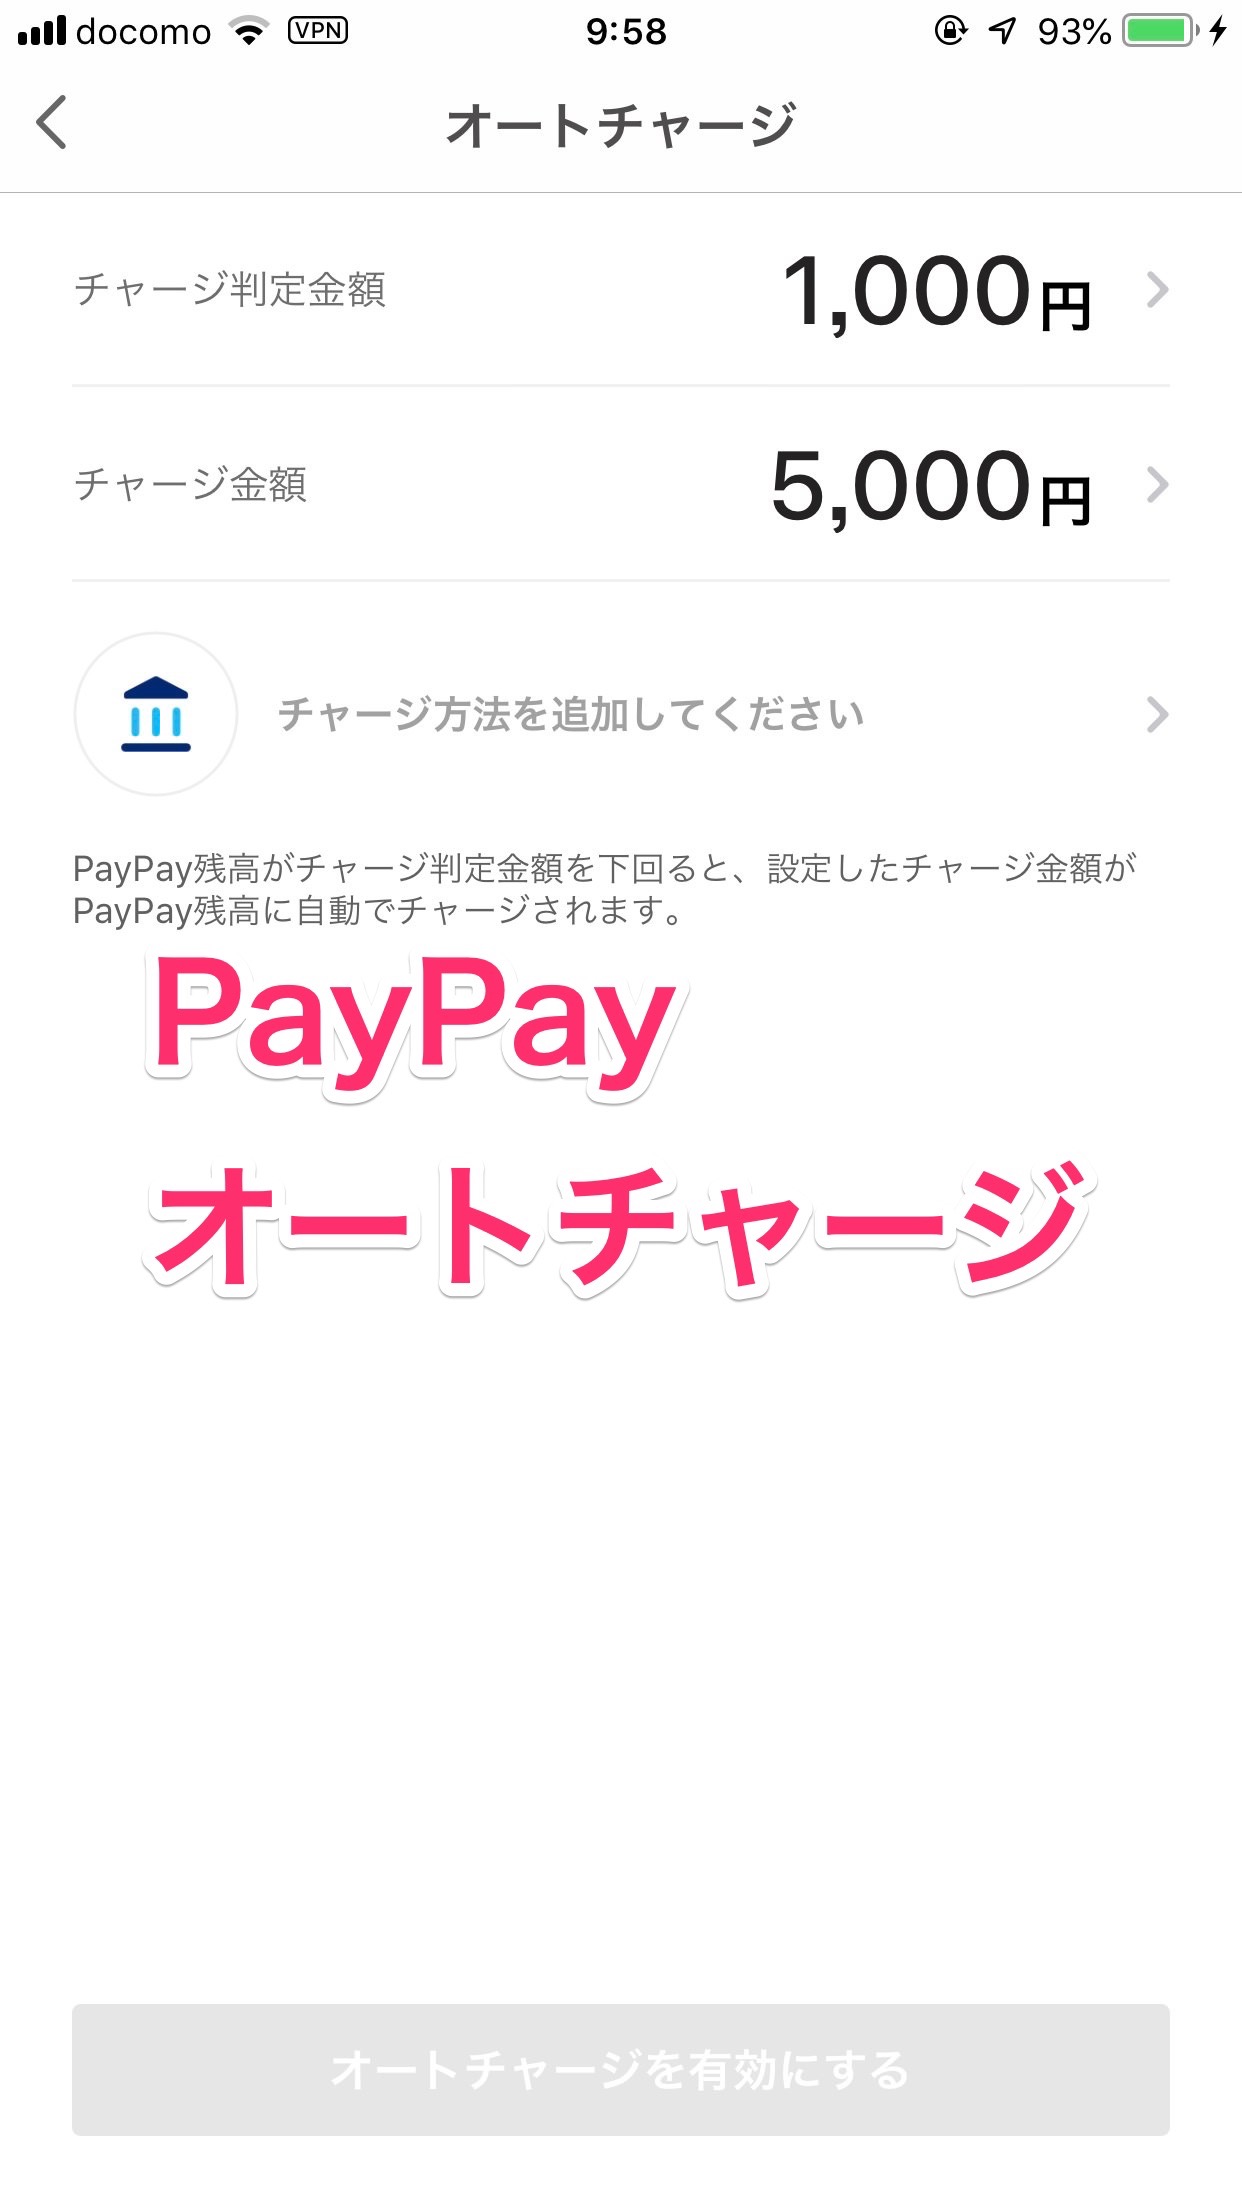 【PayPay】オートチャージに対応 〜銀行口座・ヤフーカードからチャージ可能